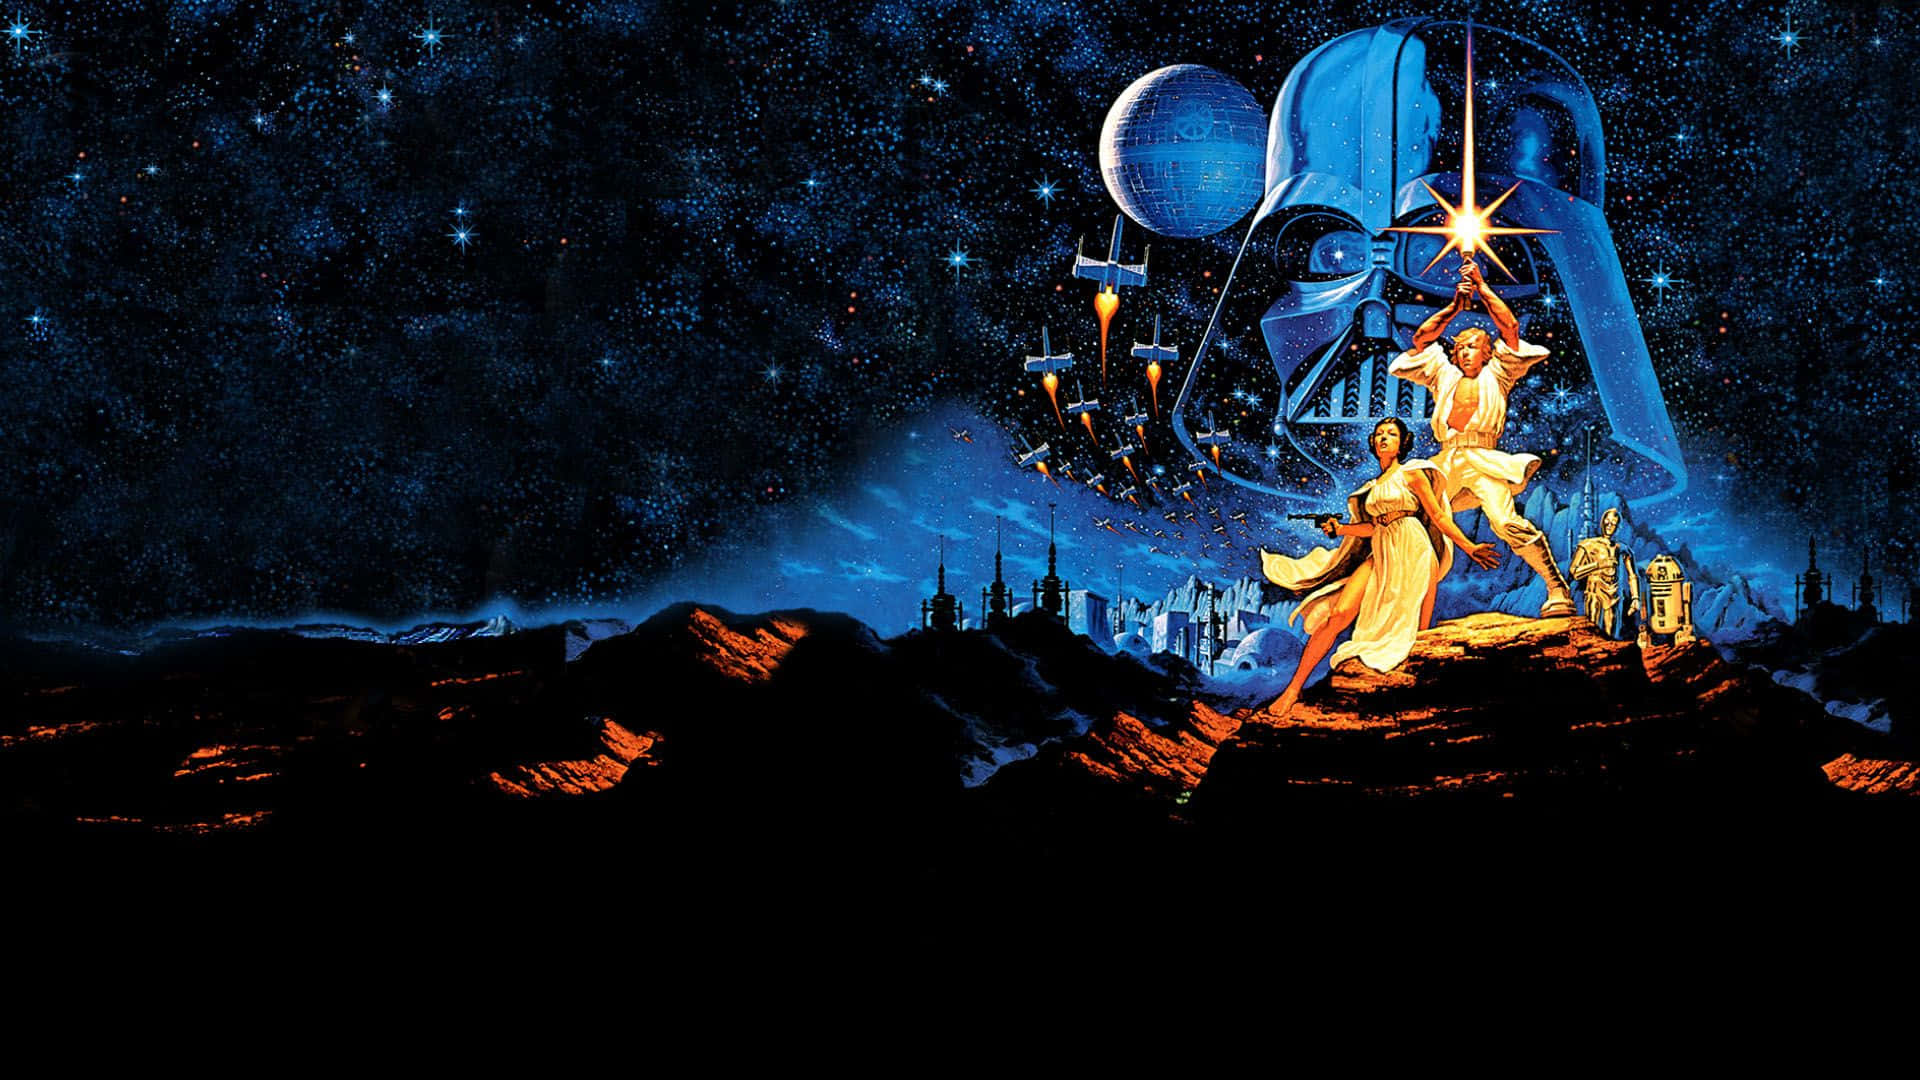 Stunning Star Wars Battle Scene featuring Iconic Spaceships in a Cosmic Showdown